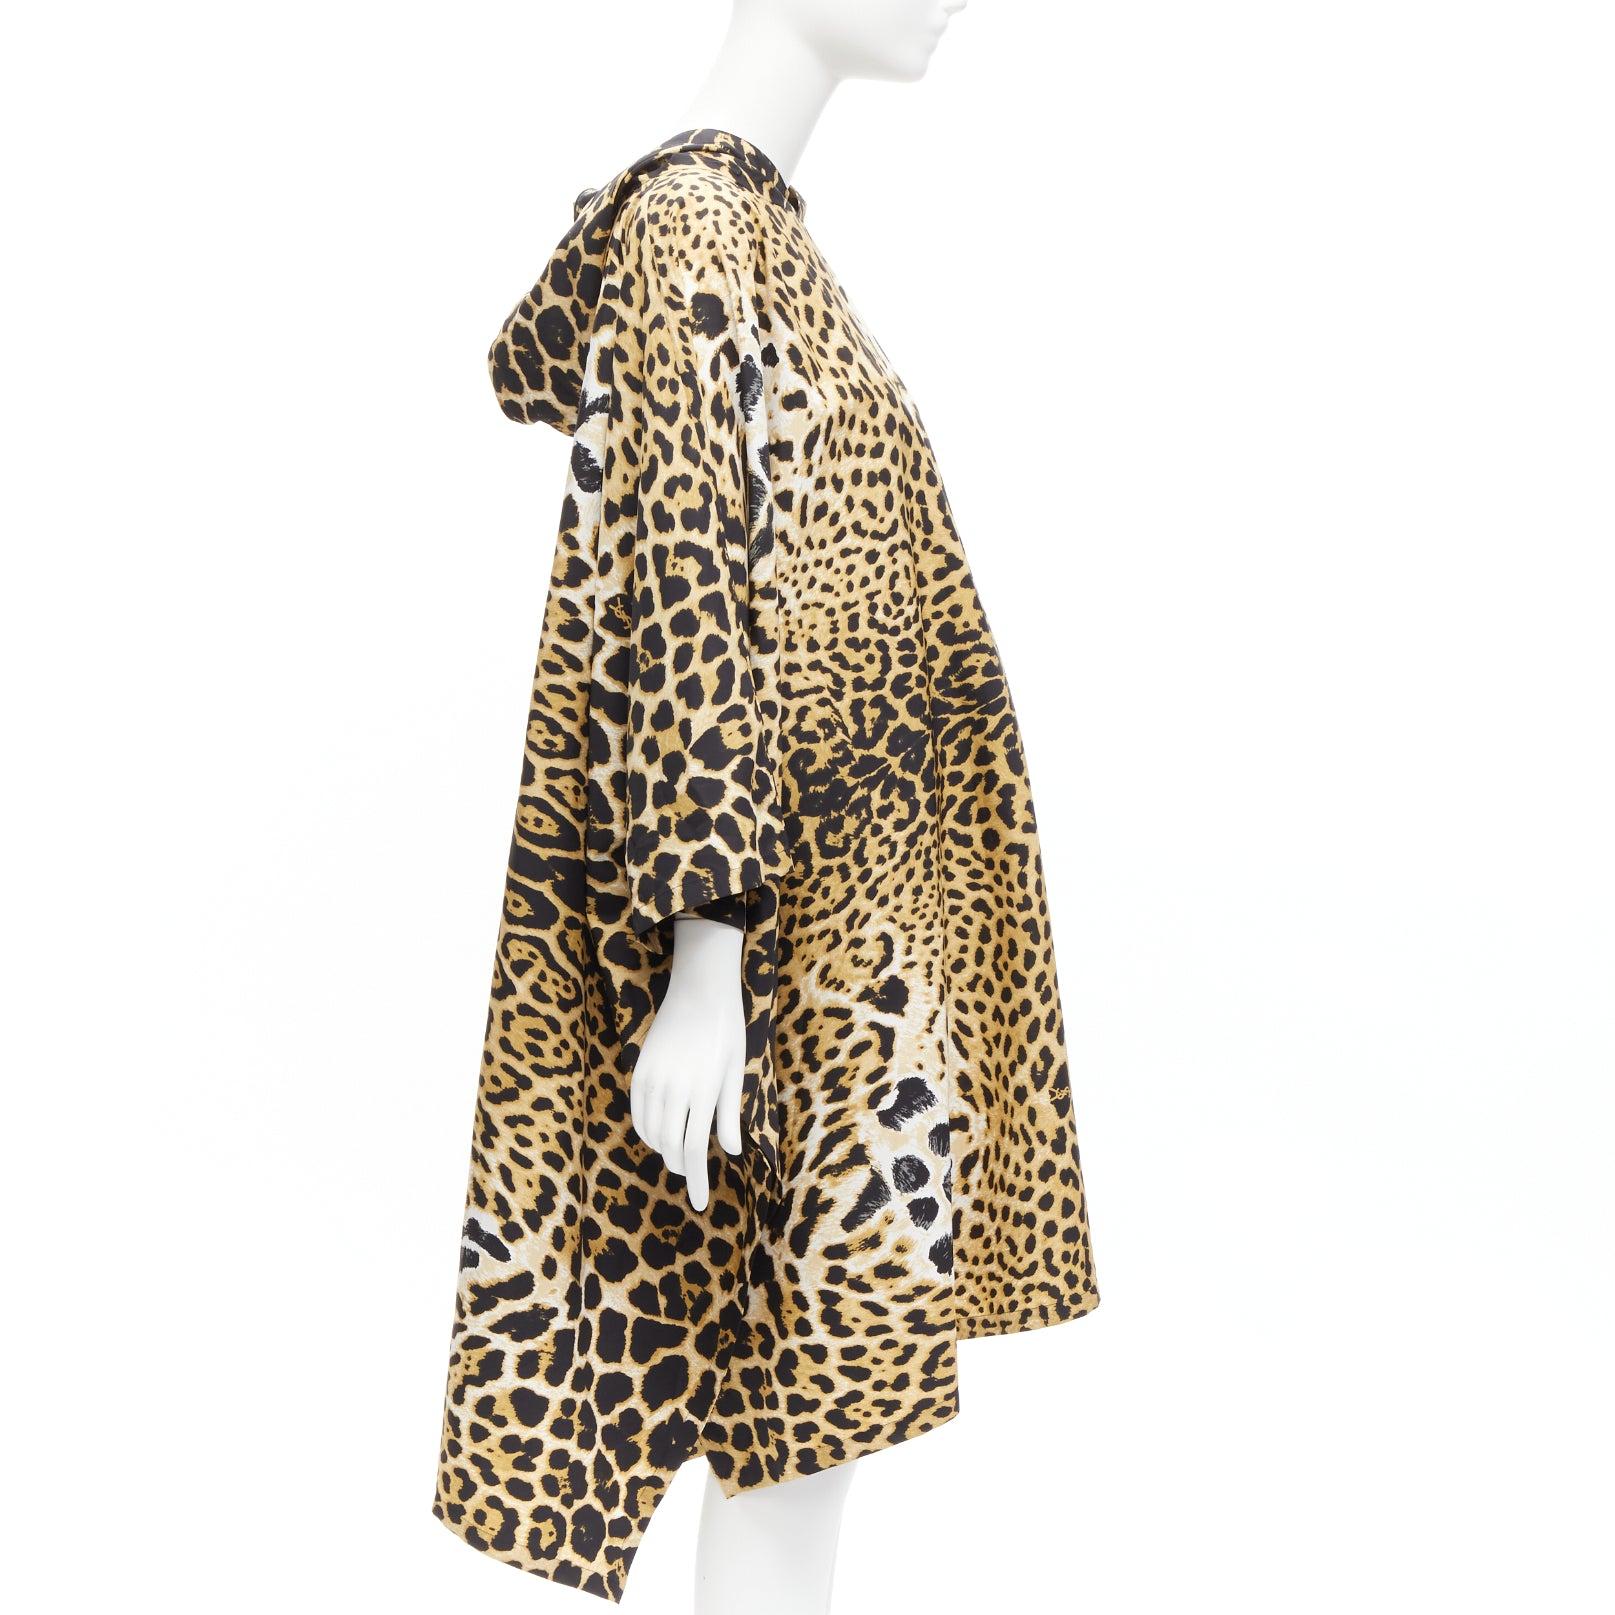 Women's YVES SAINT LAURENT Stefano Pilati 2011 Vintage leopard spot hooded poncho FR36 S